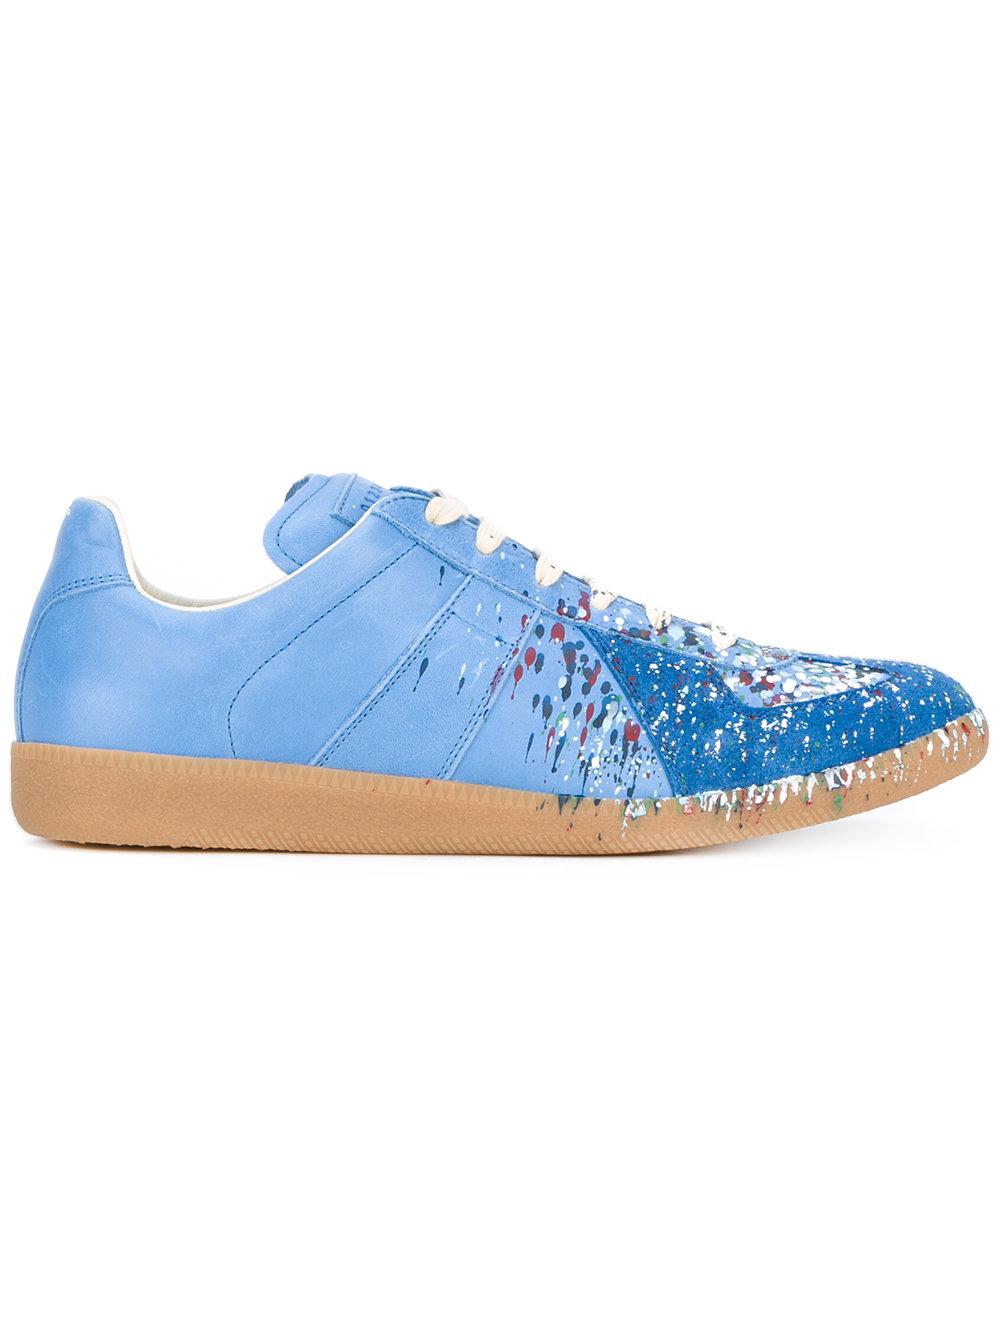 Maison Margiela Leather Paint Splatter Sneakers in Blue for Men | Lyst